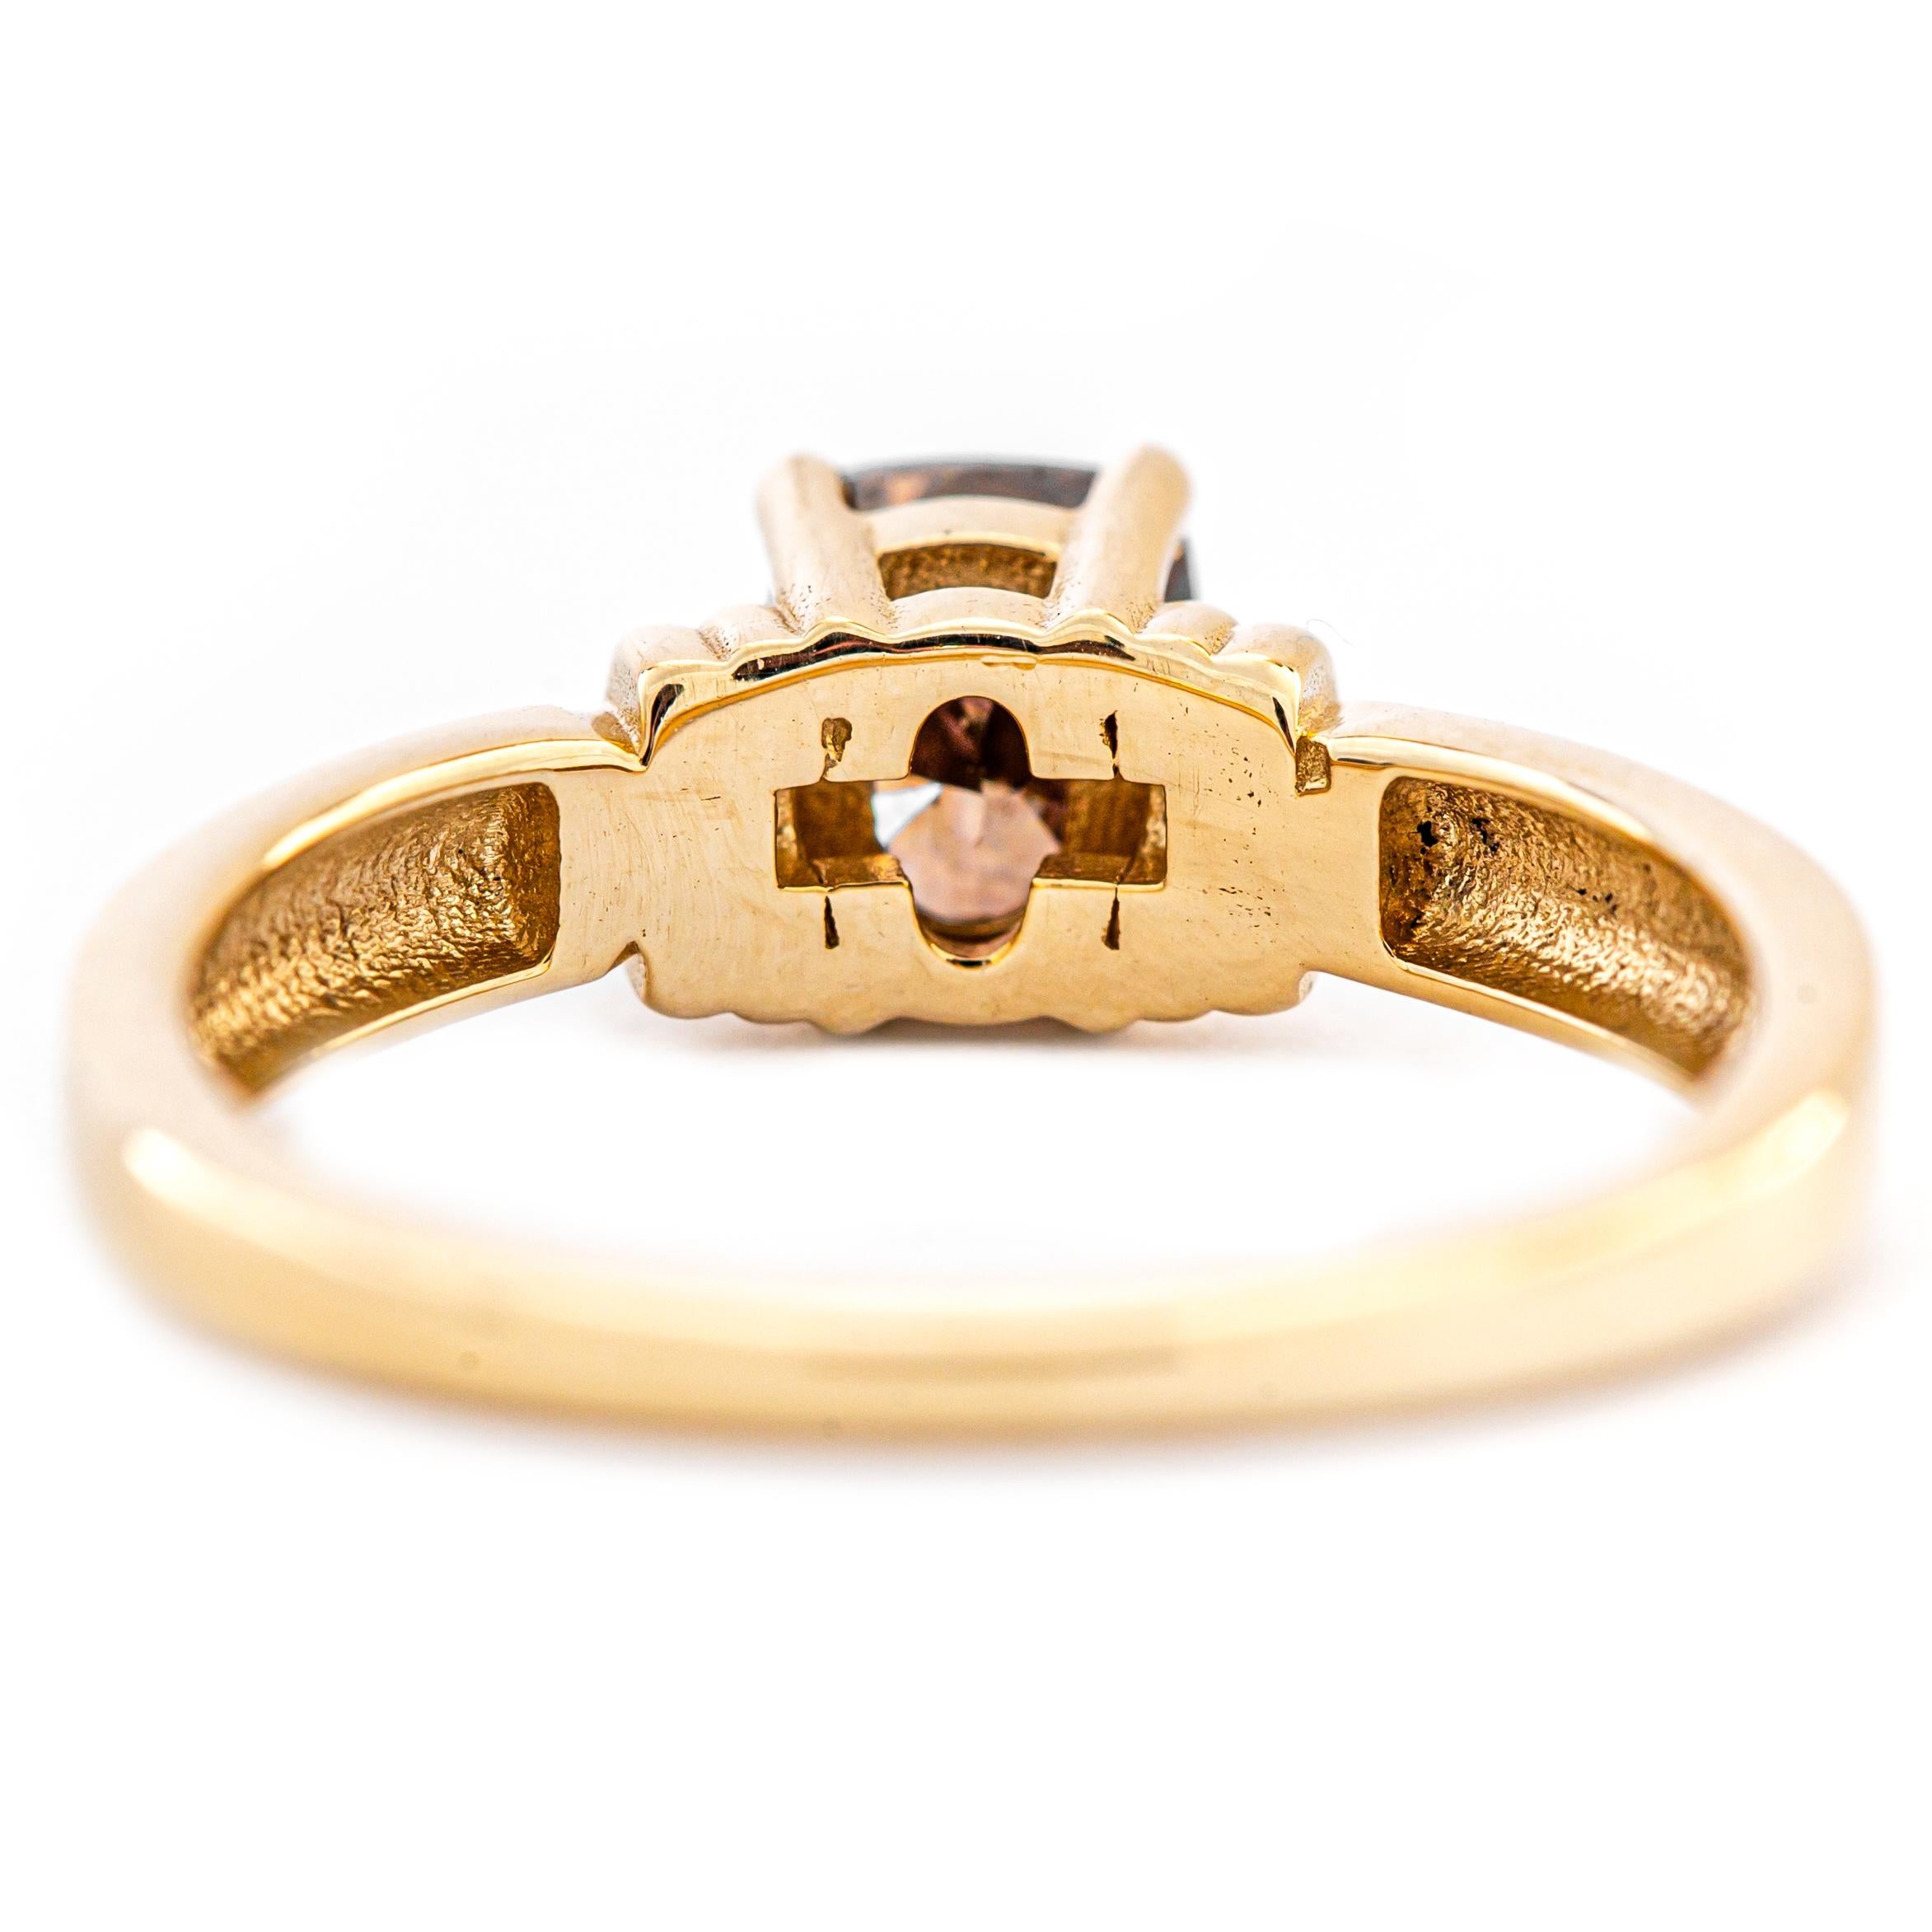 1.02ct Natural Fancy Deep Pinkish Brown Diamond Ring, No Reserve Price 2